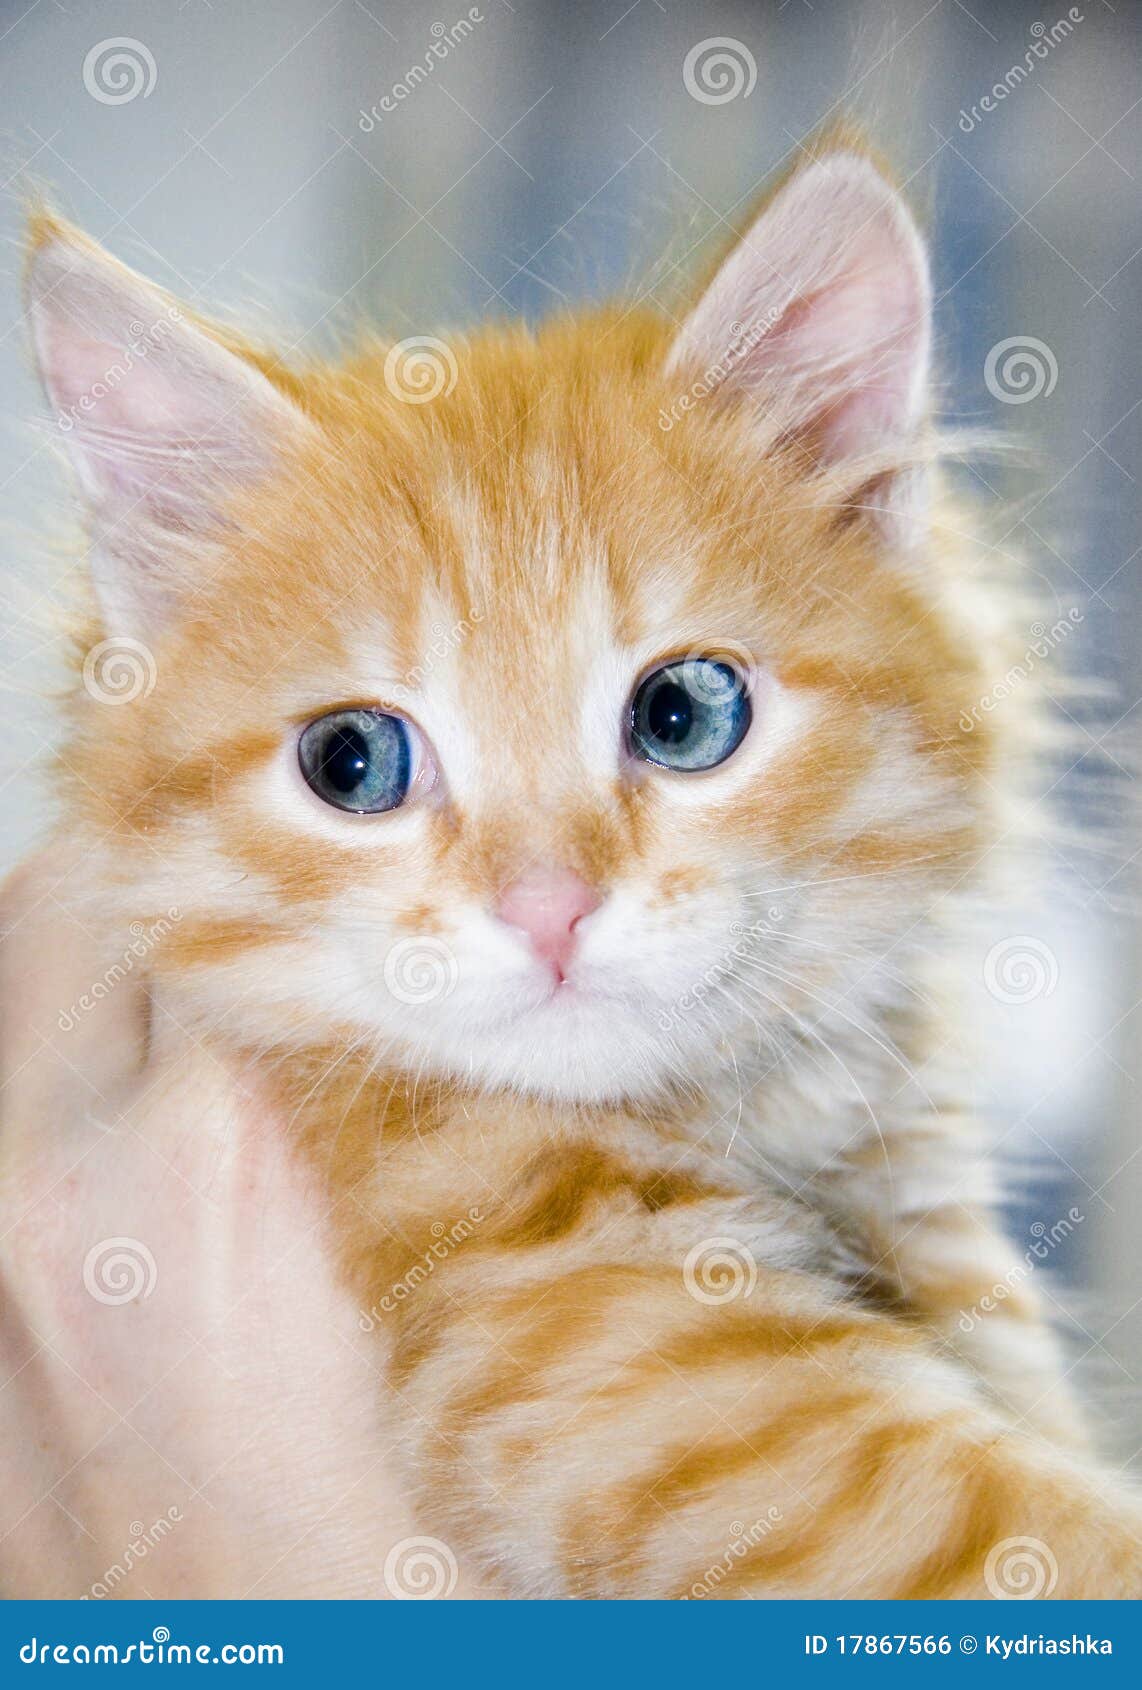 Animal Lona Pared Arte-Bebé Jengibre/Naranja Gato De Gatito-con ojos azules/Close Up 